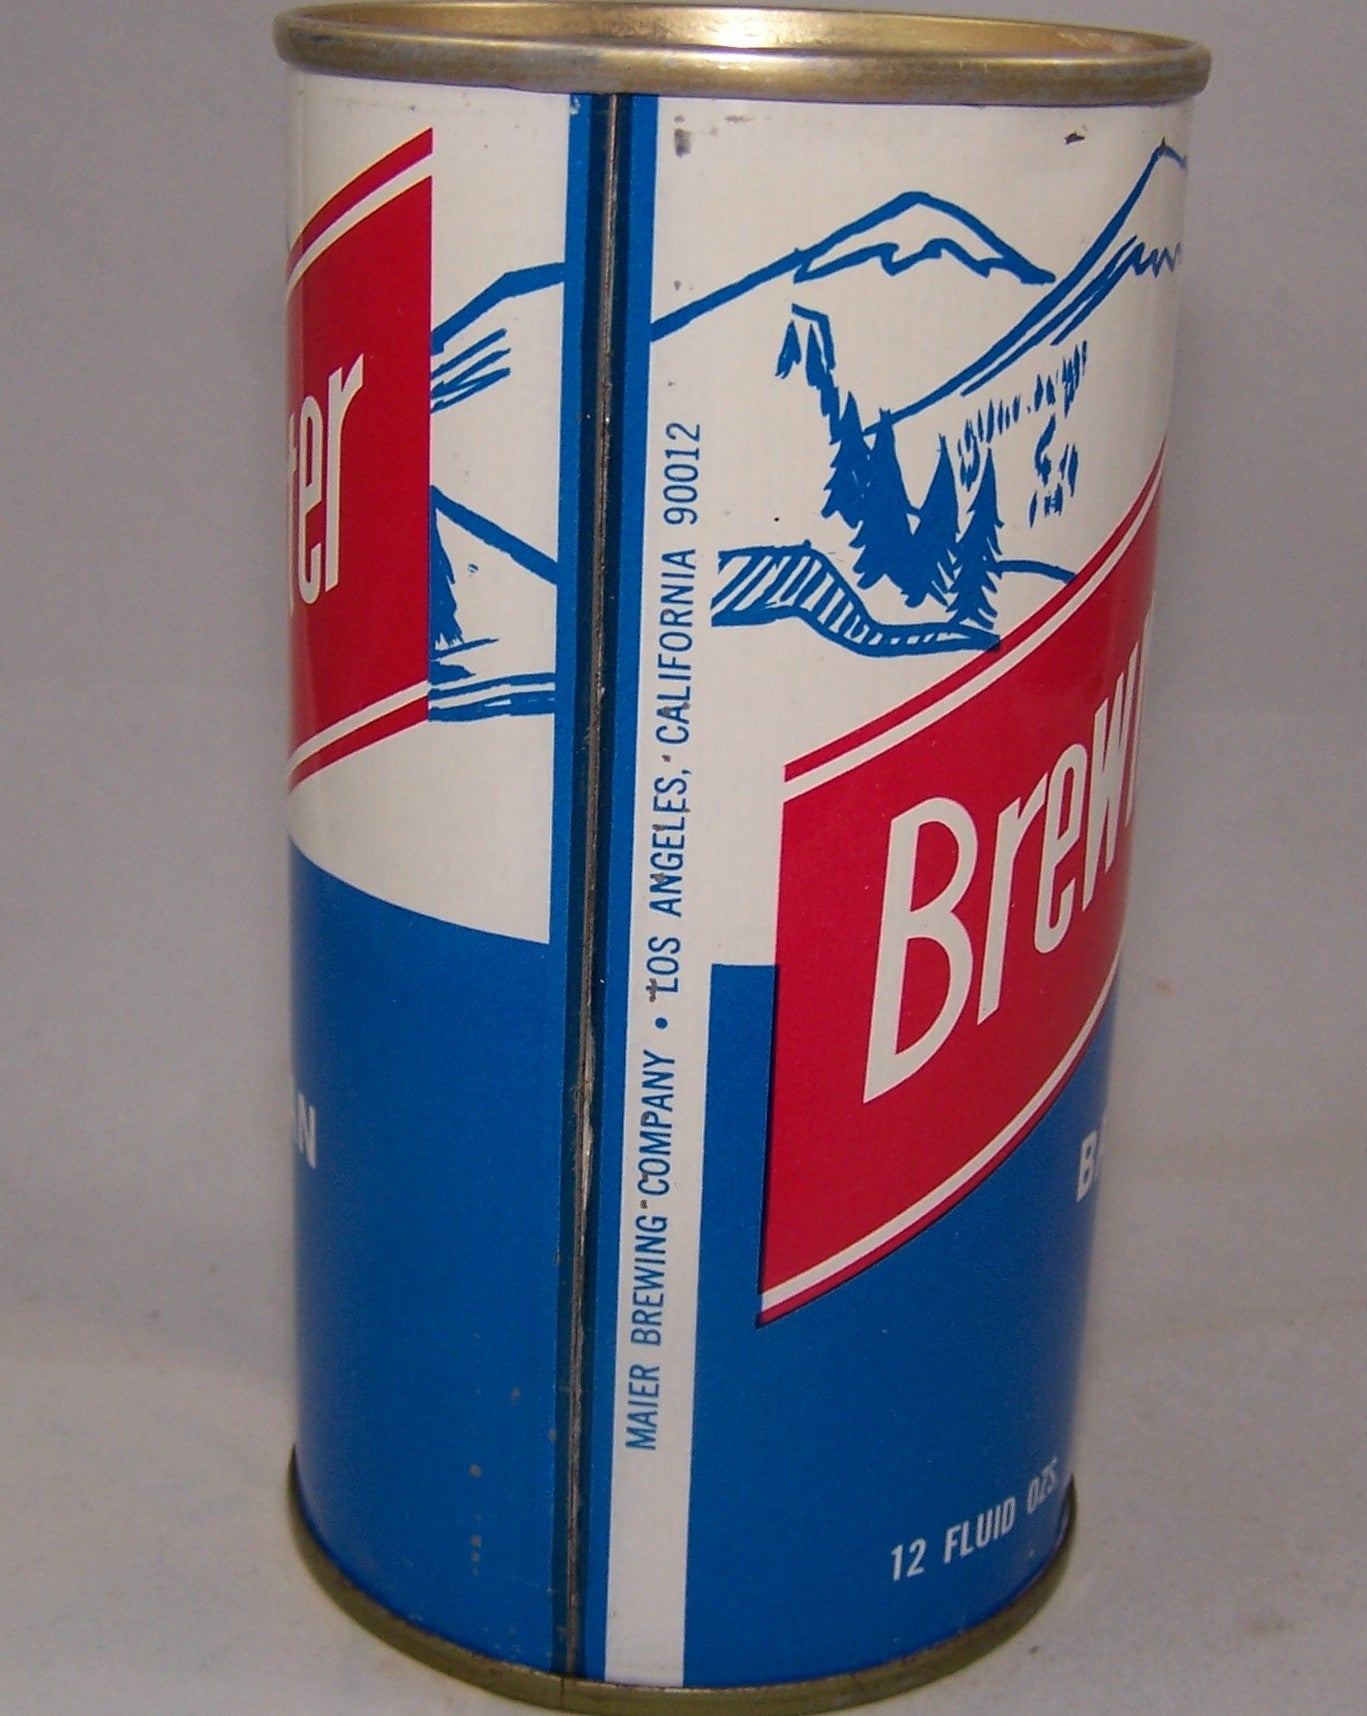 Brewmaster Bavarian Beer, USBC II 45-35, Grade 1 Sold on 05/15/16